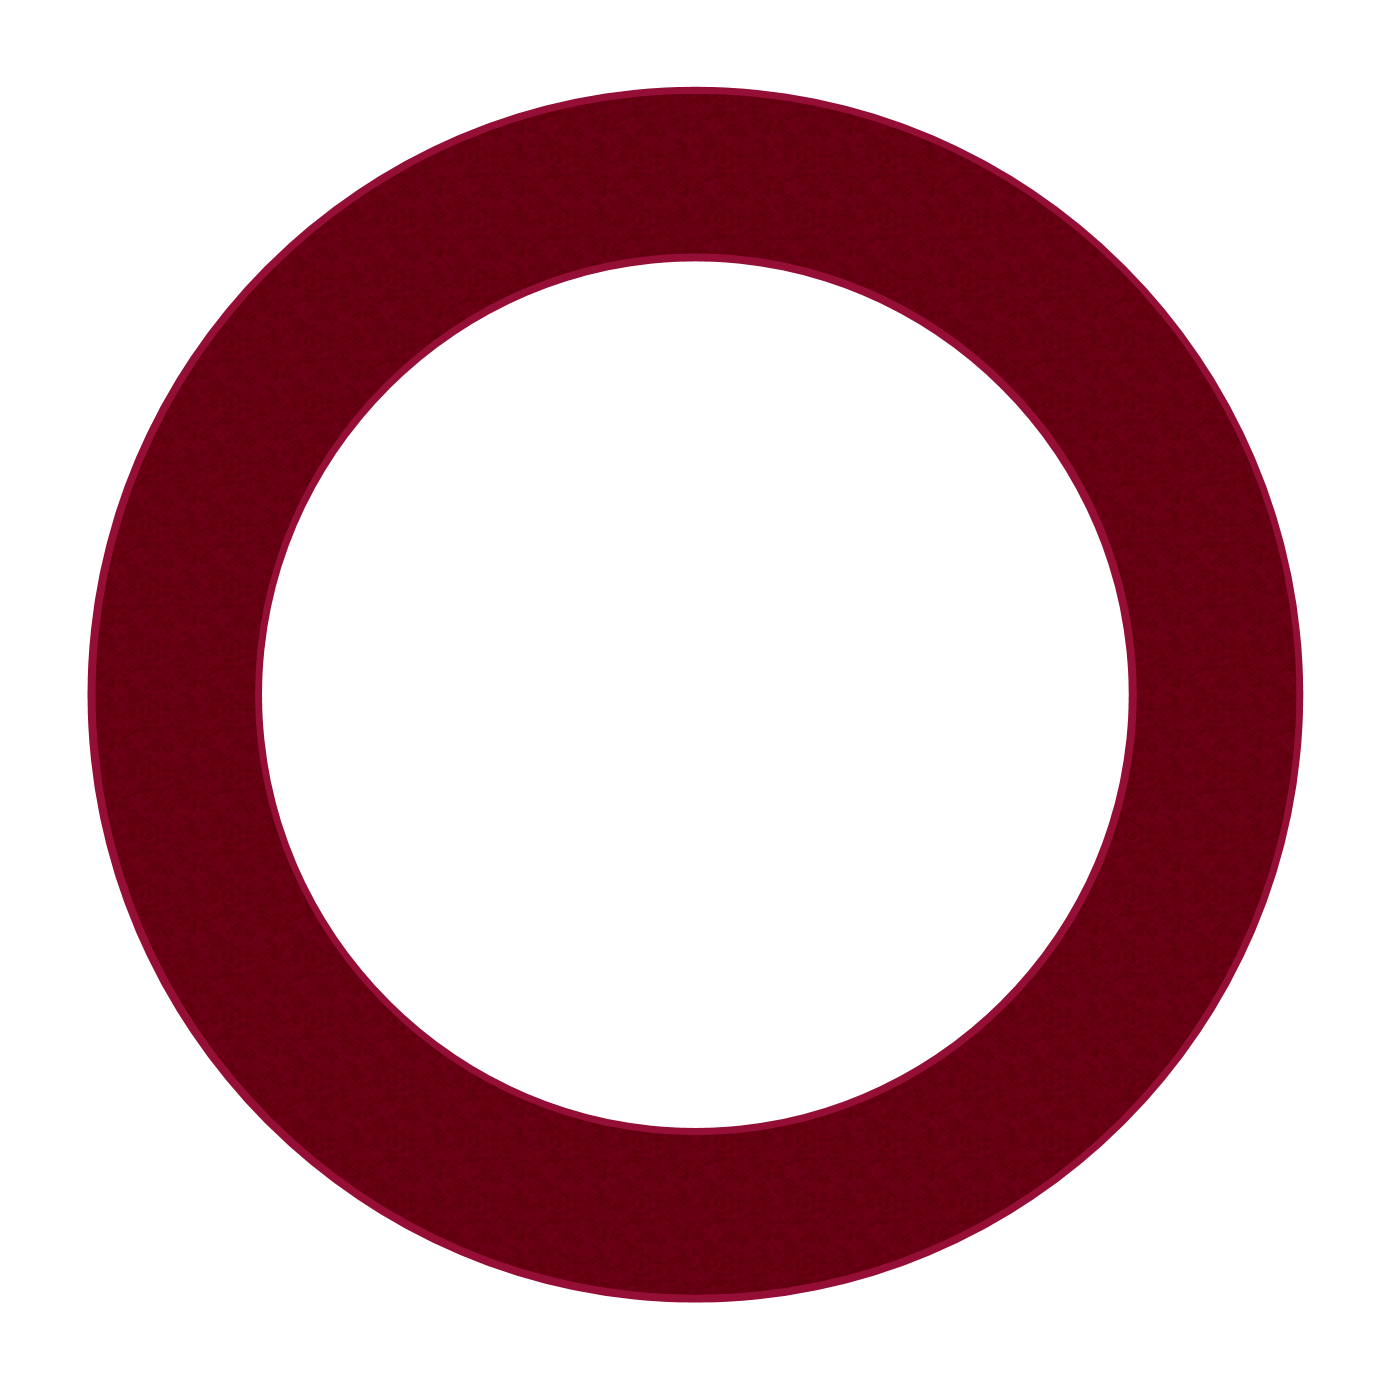 circle logo clip art - photo #45